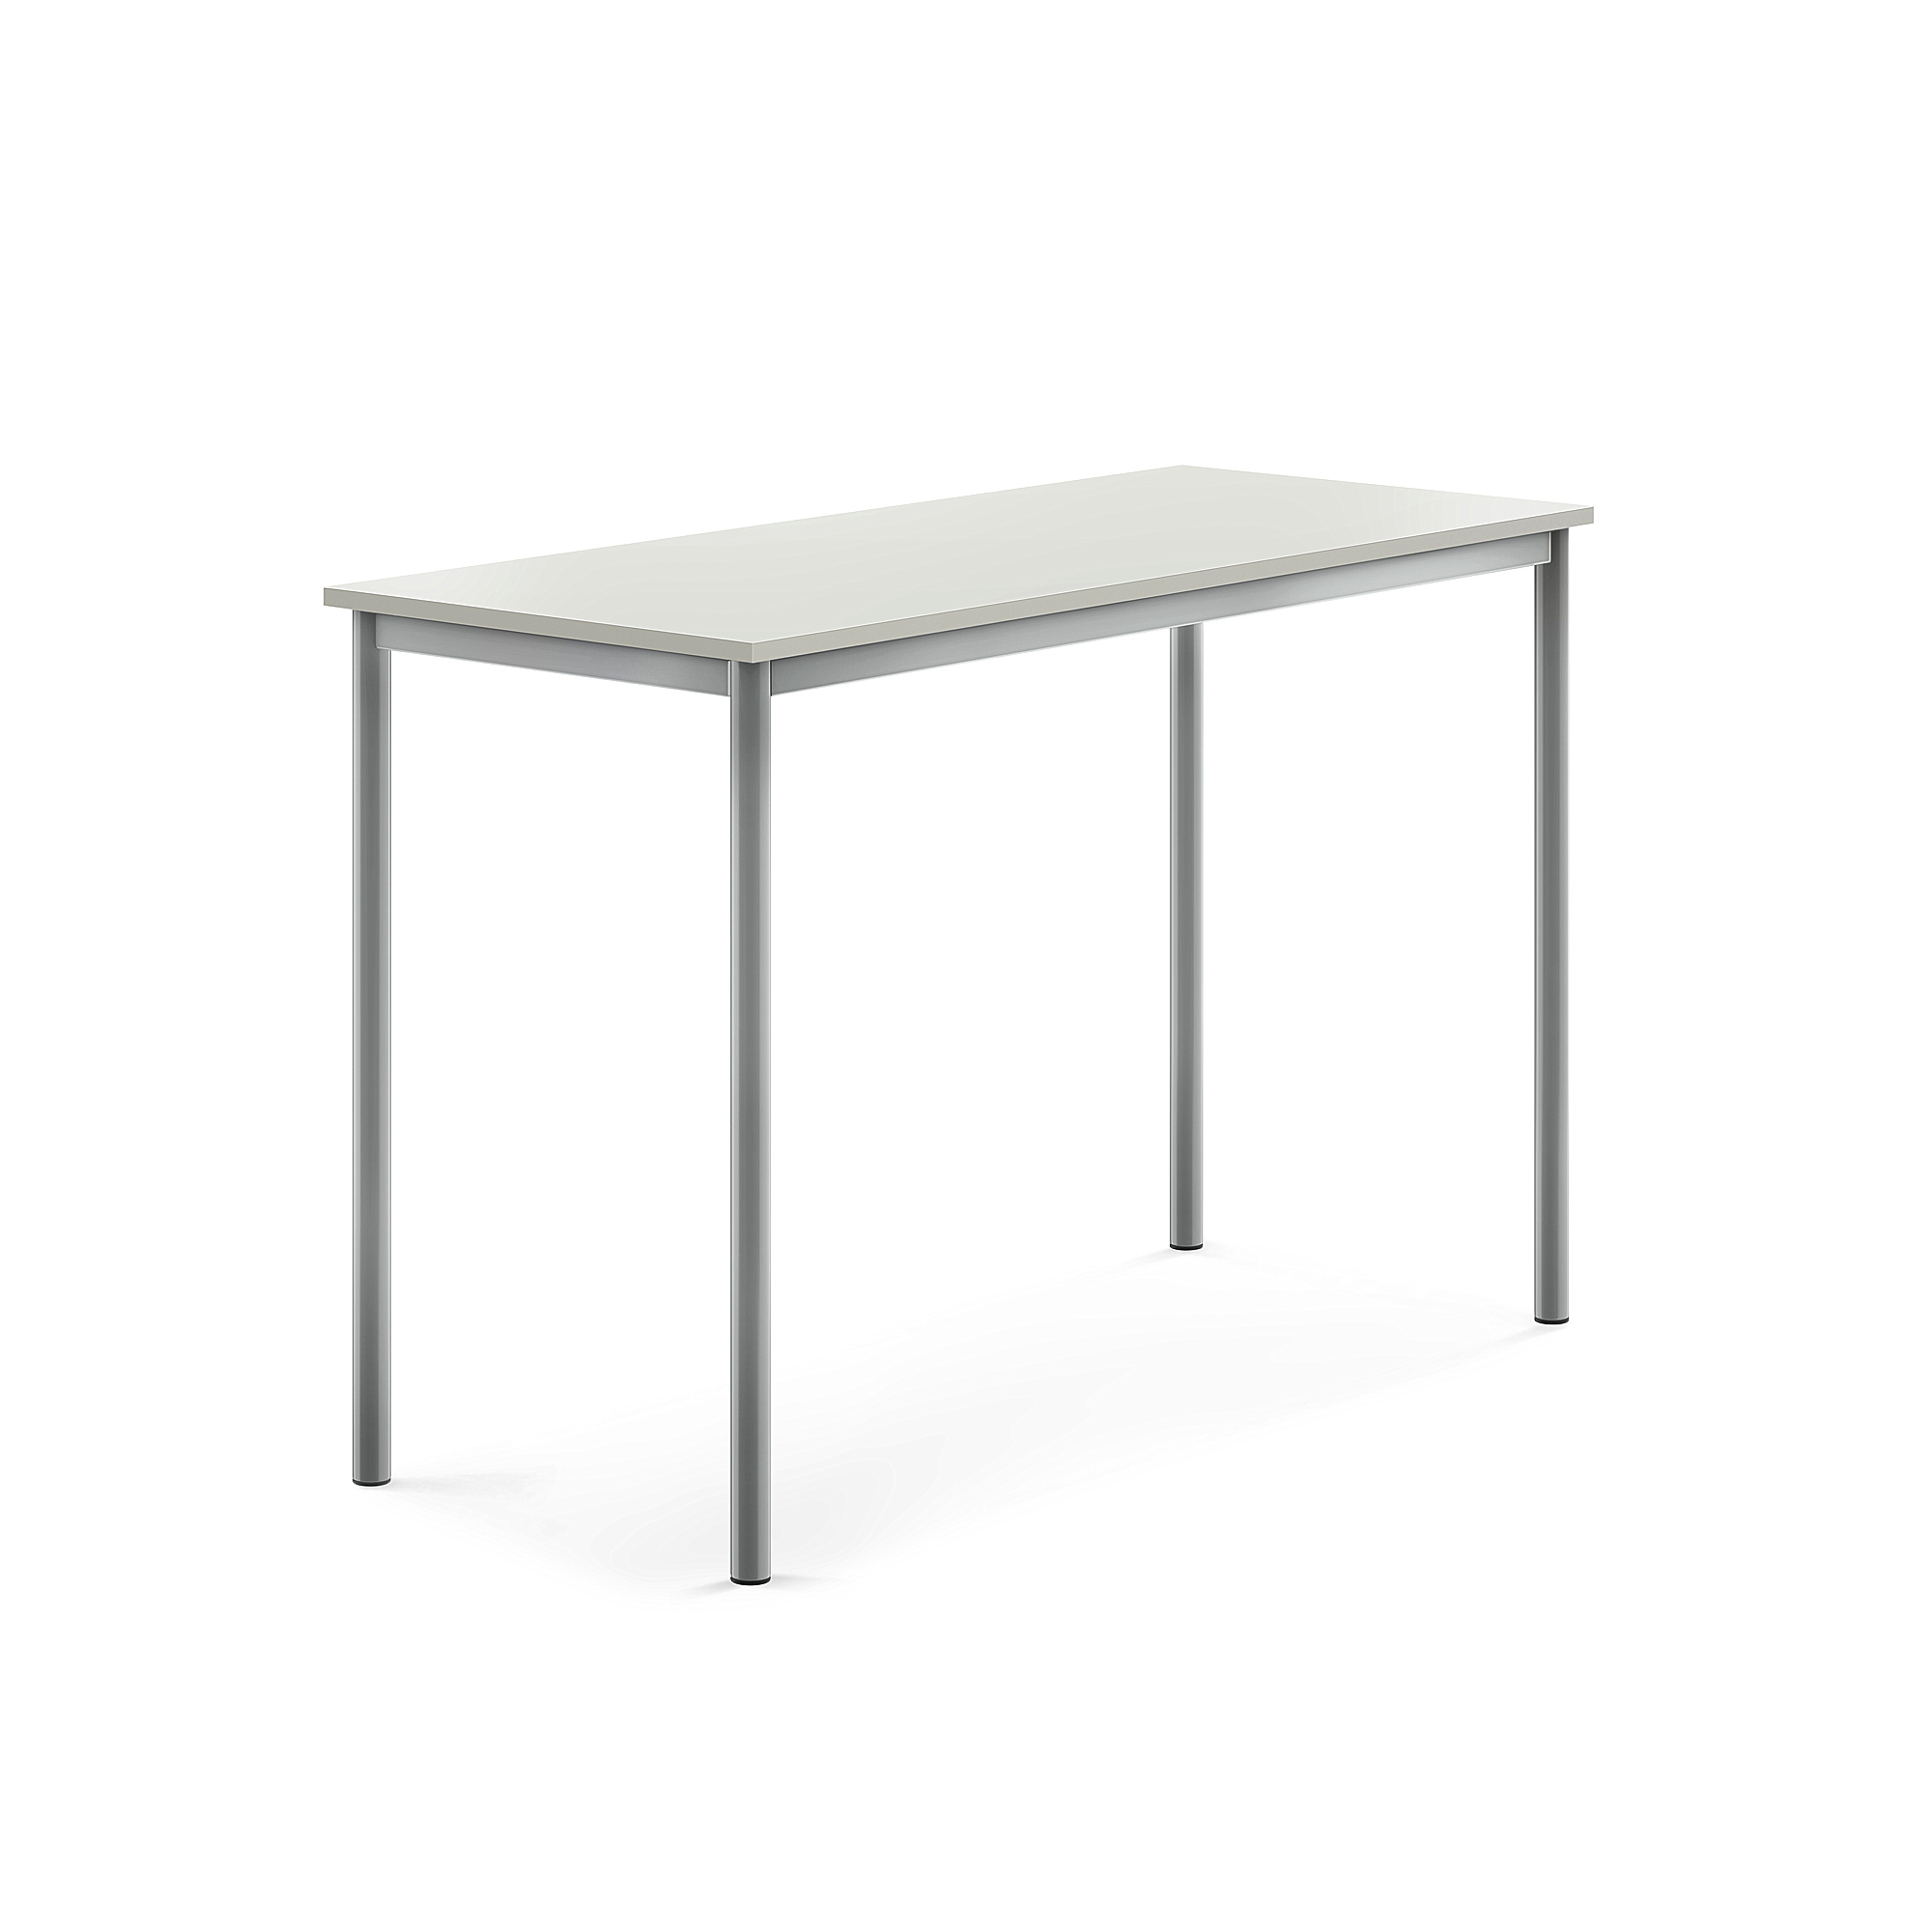 Stůl SONITUS, 1400x600x900 mm, stříbrné nohy, HPL deska tlumící hluk, šedá